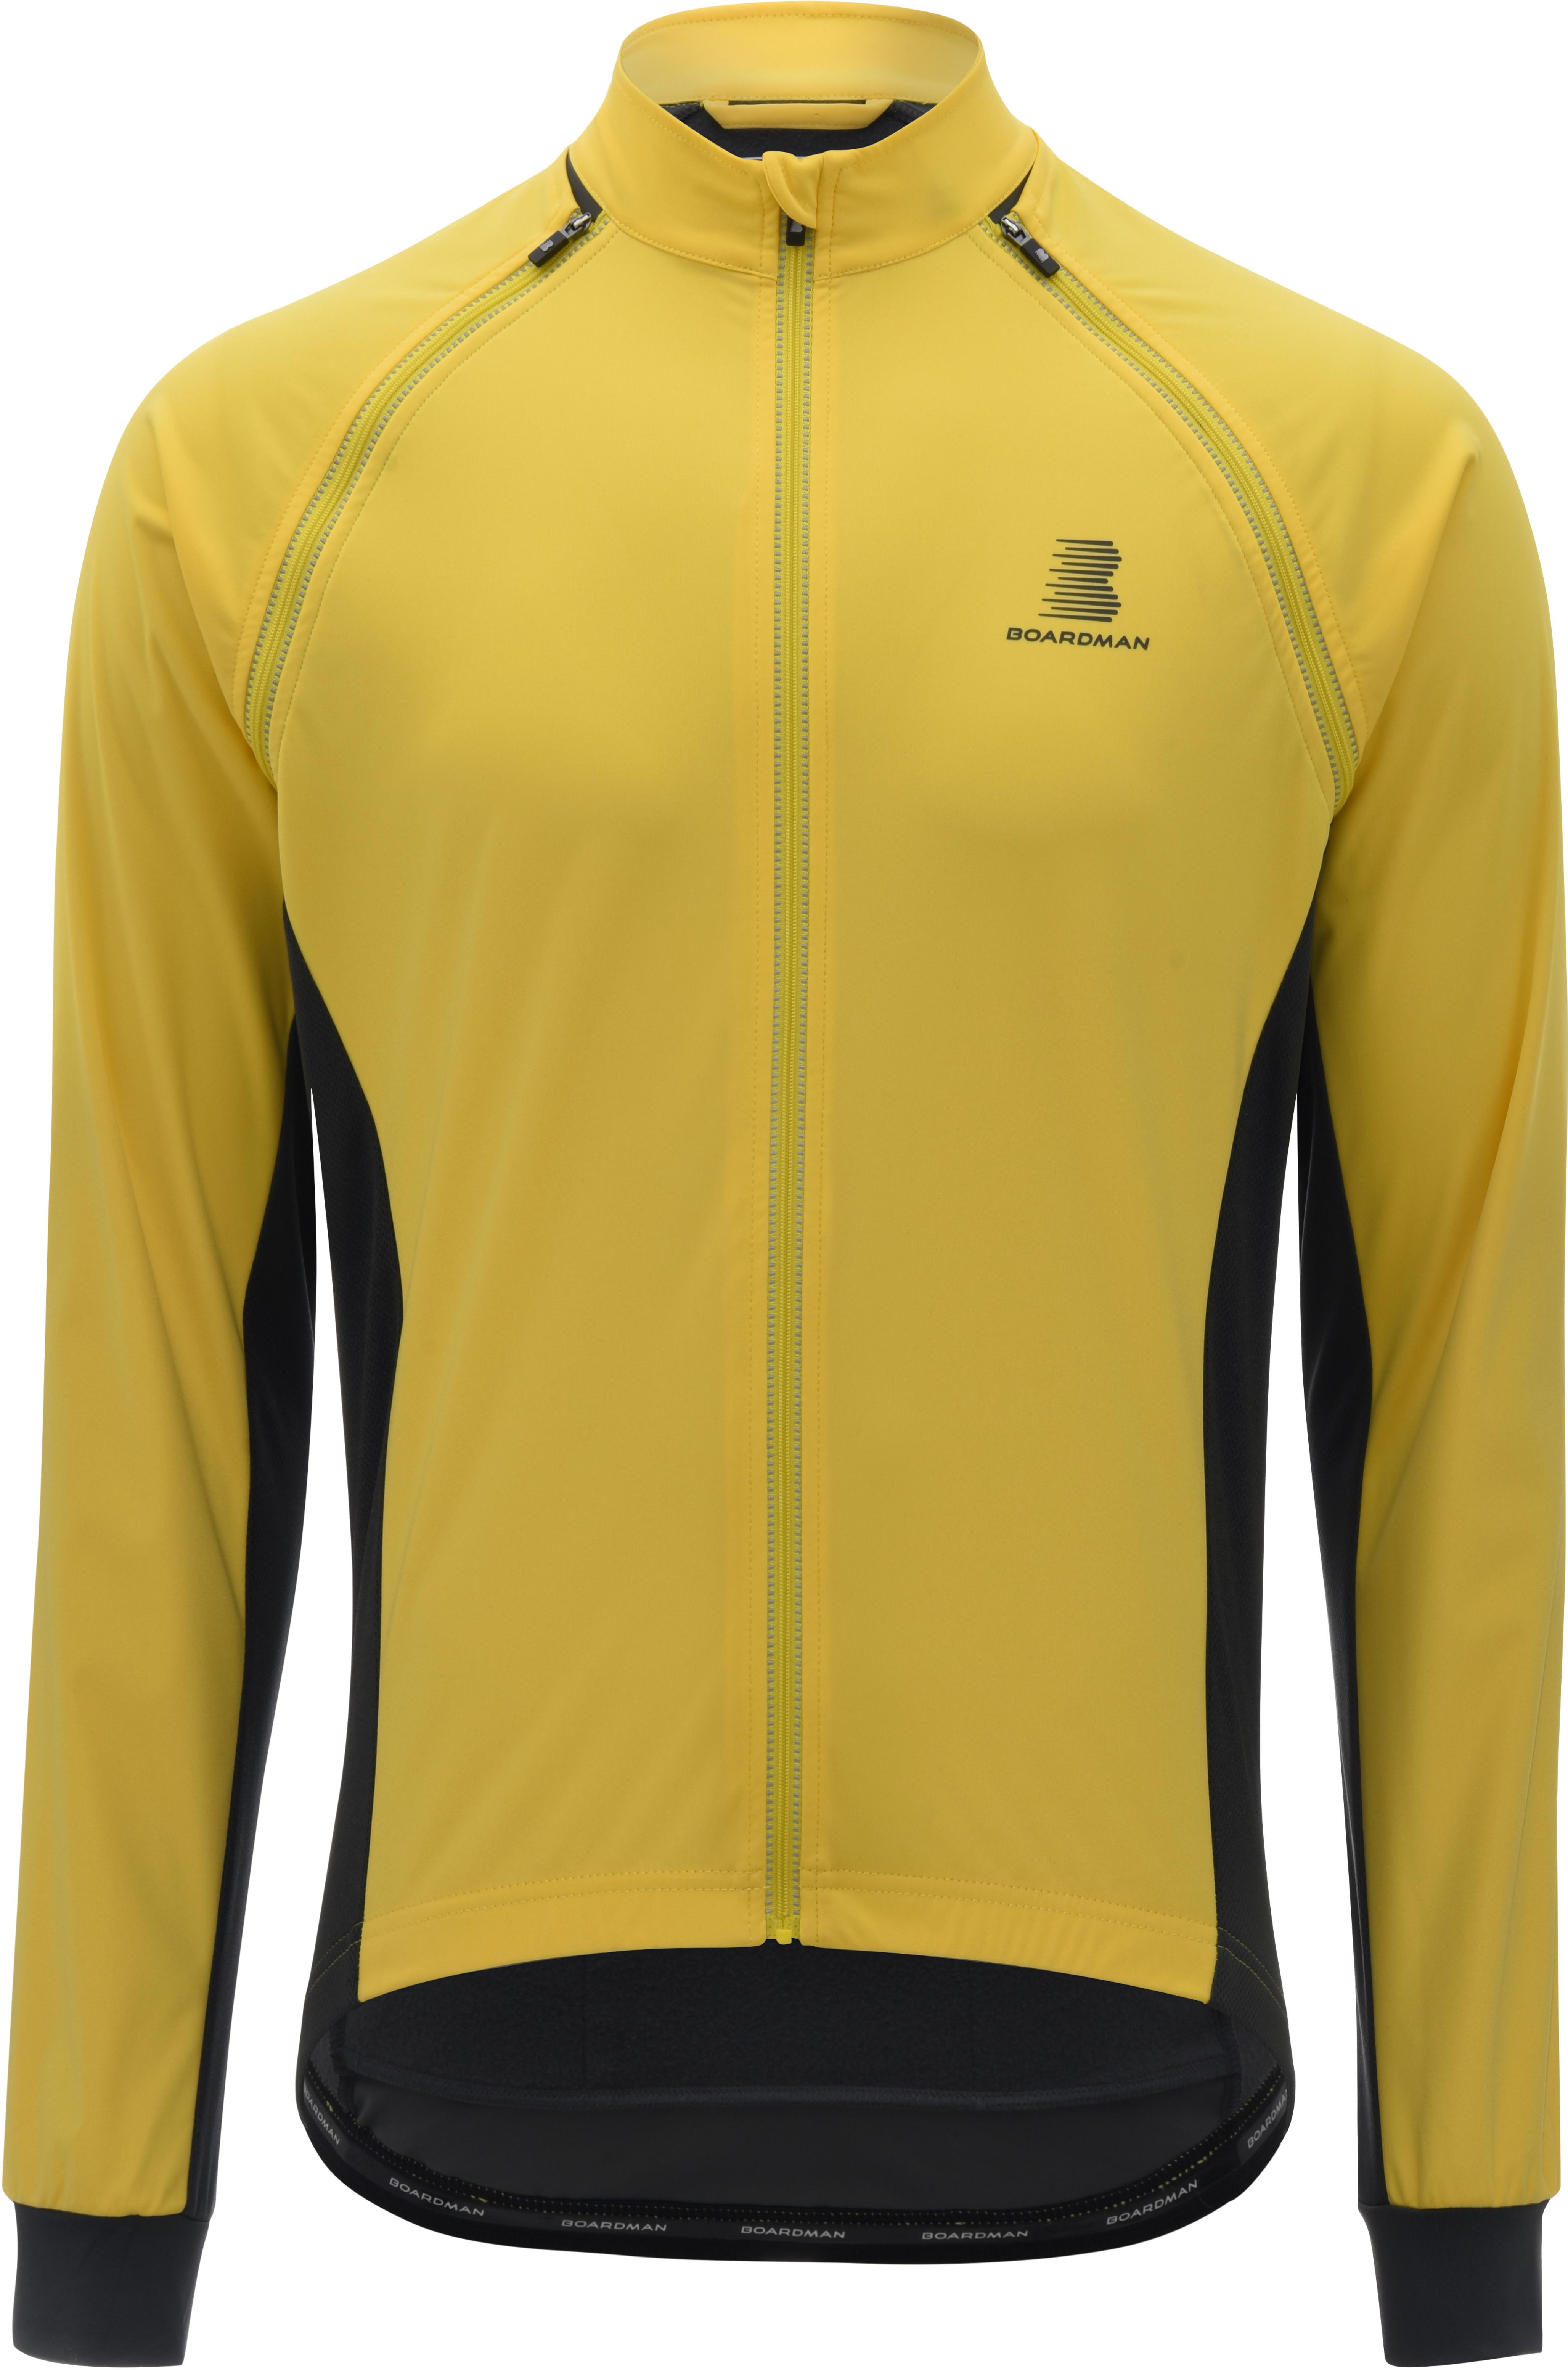 Boardman Mens Removable Sleeve Windproof Jacket - Yellow, L